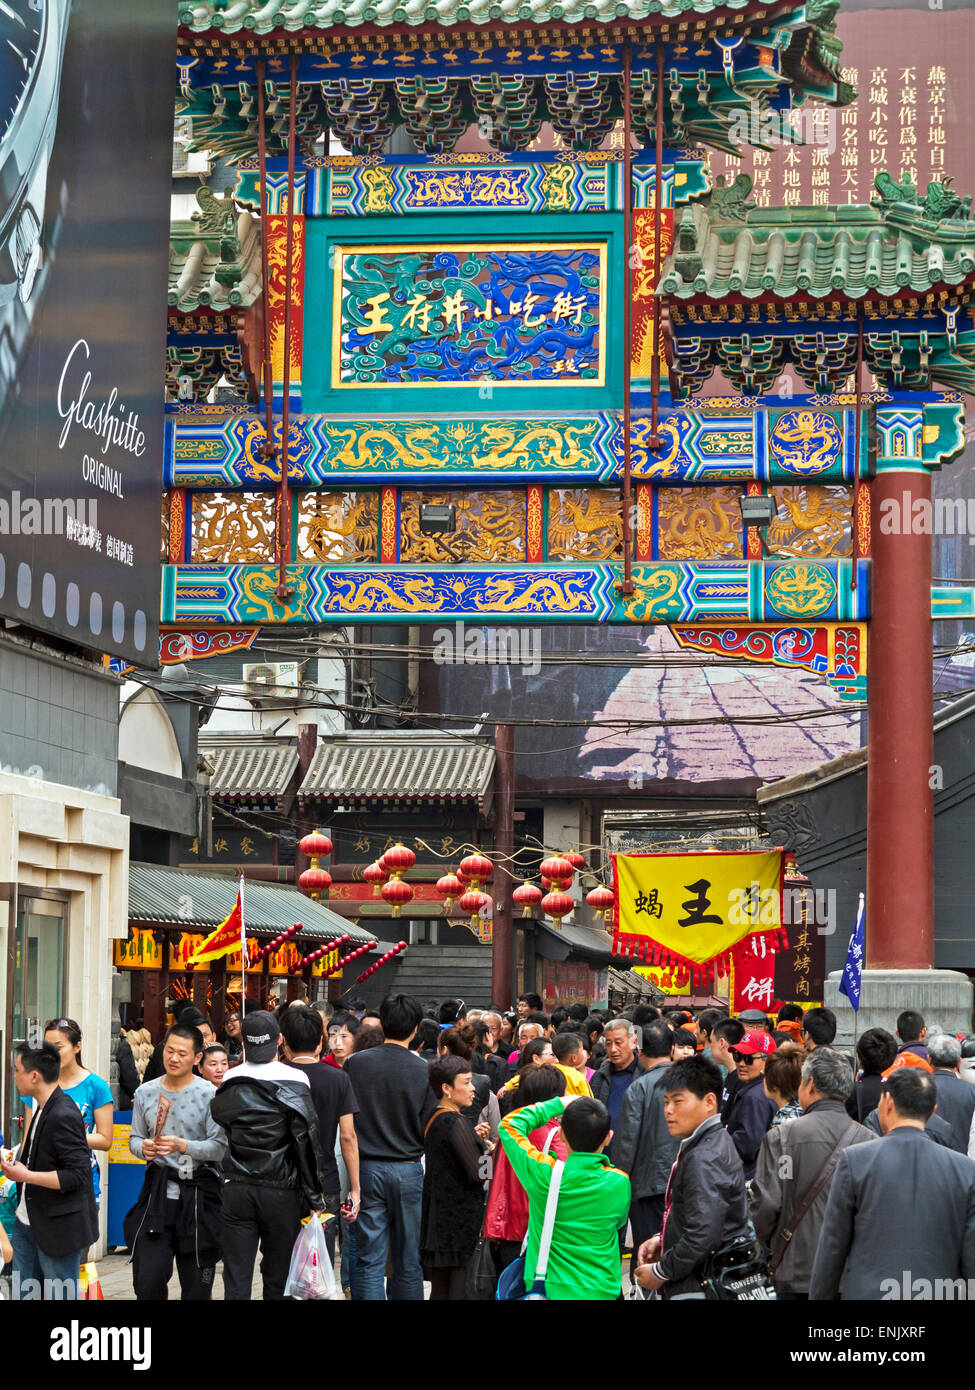 Decorative gateway entrance to the Wangfujing Street night market, Beijing, China, Asia Stock Photo